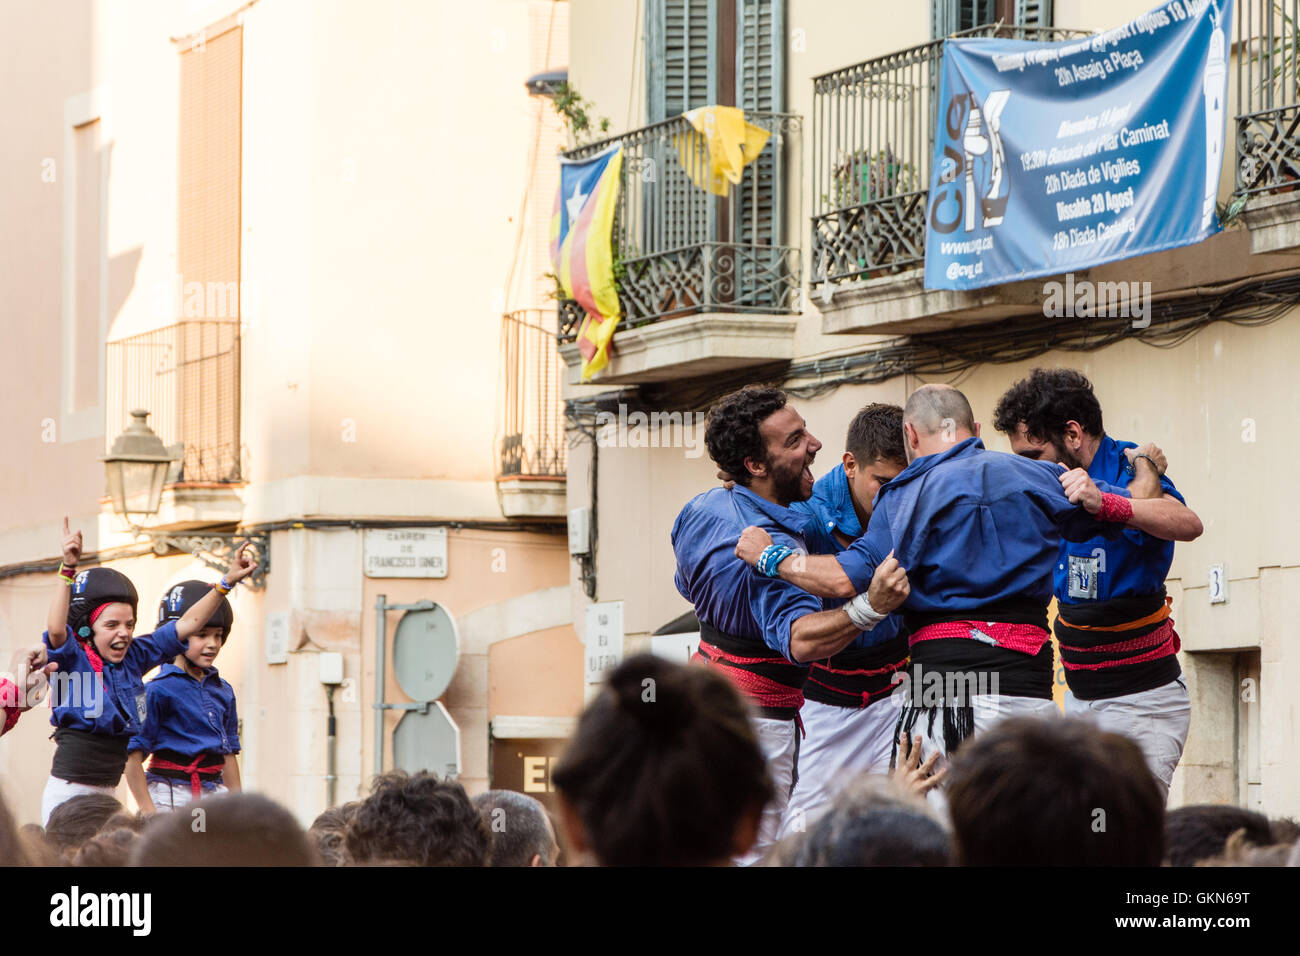 A castell competition during the Festa de Gracia, Barcelona Stock Photo